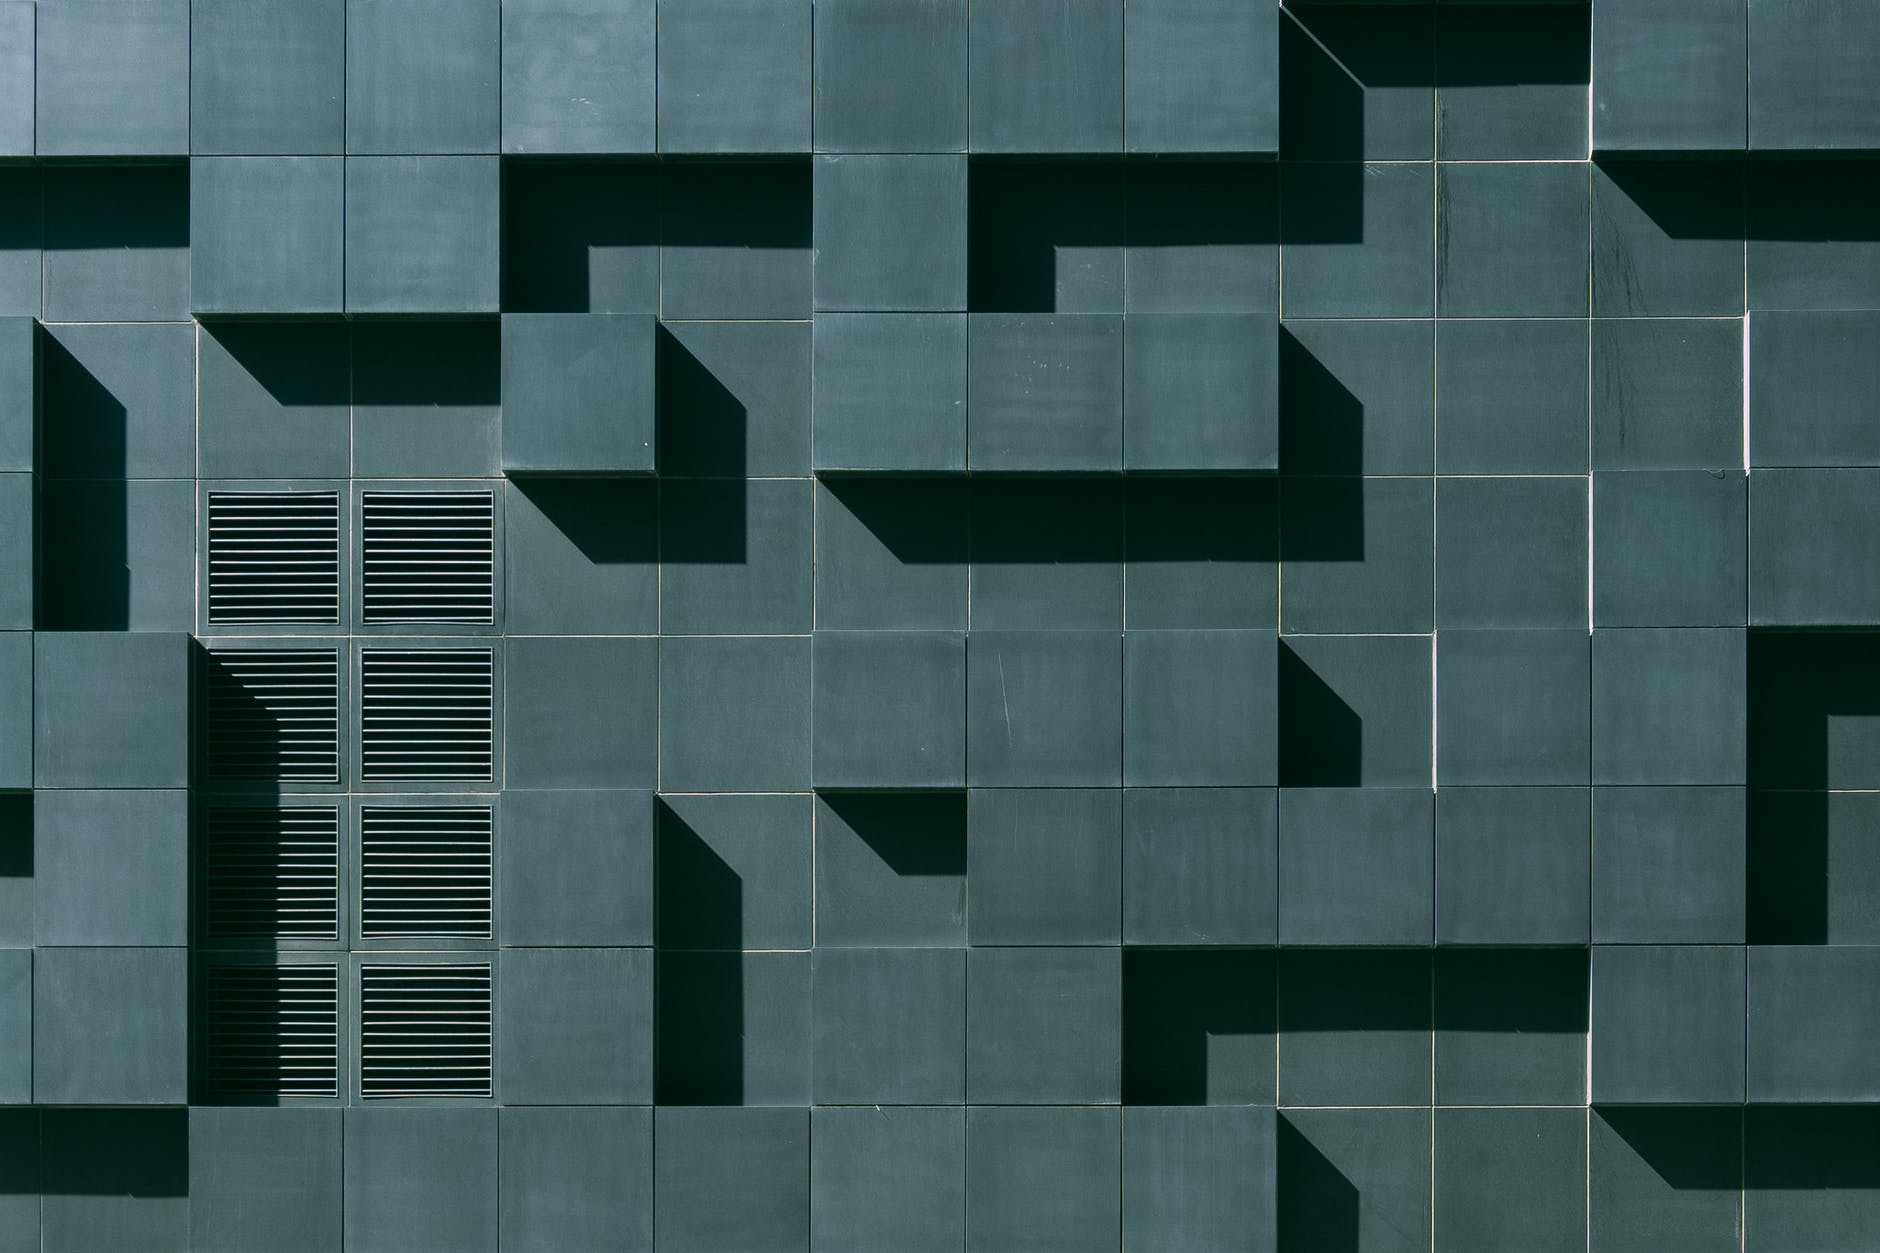 gray concrete building exterior with geometric design